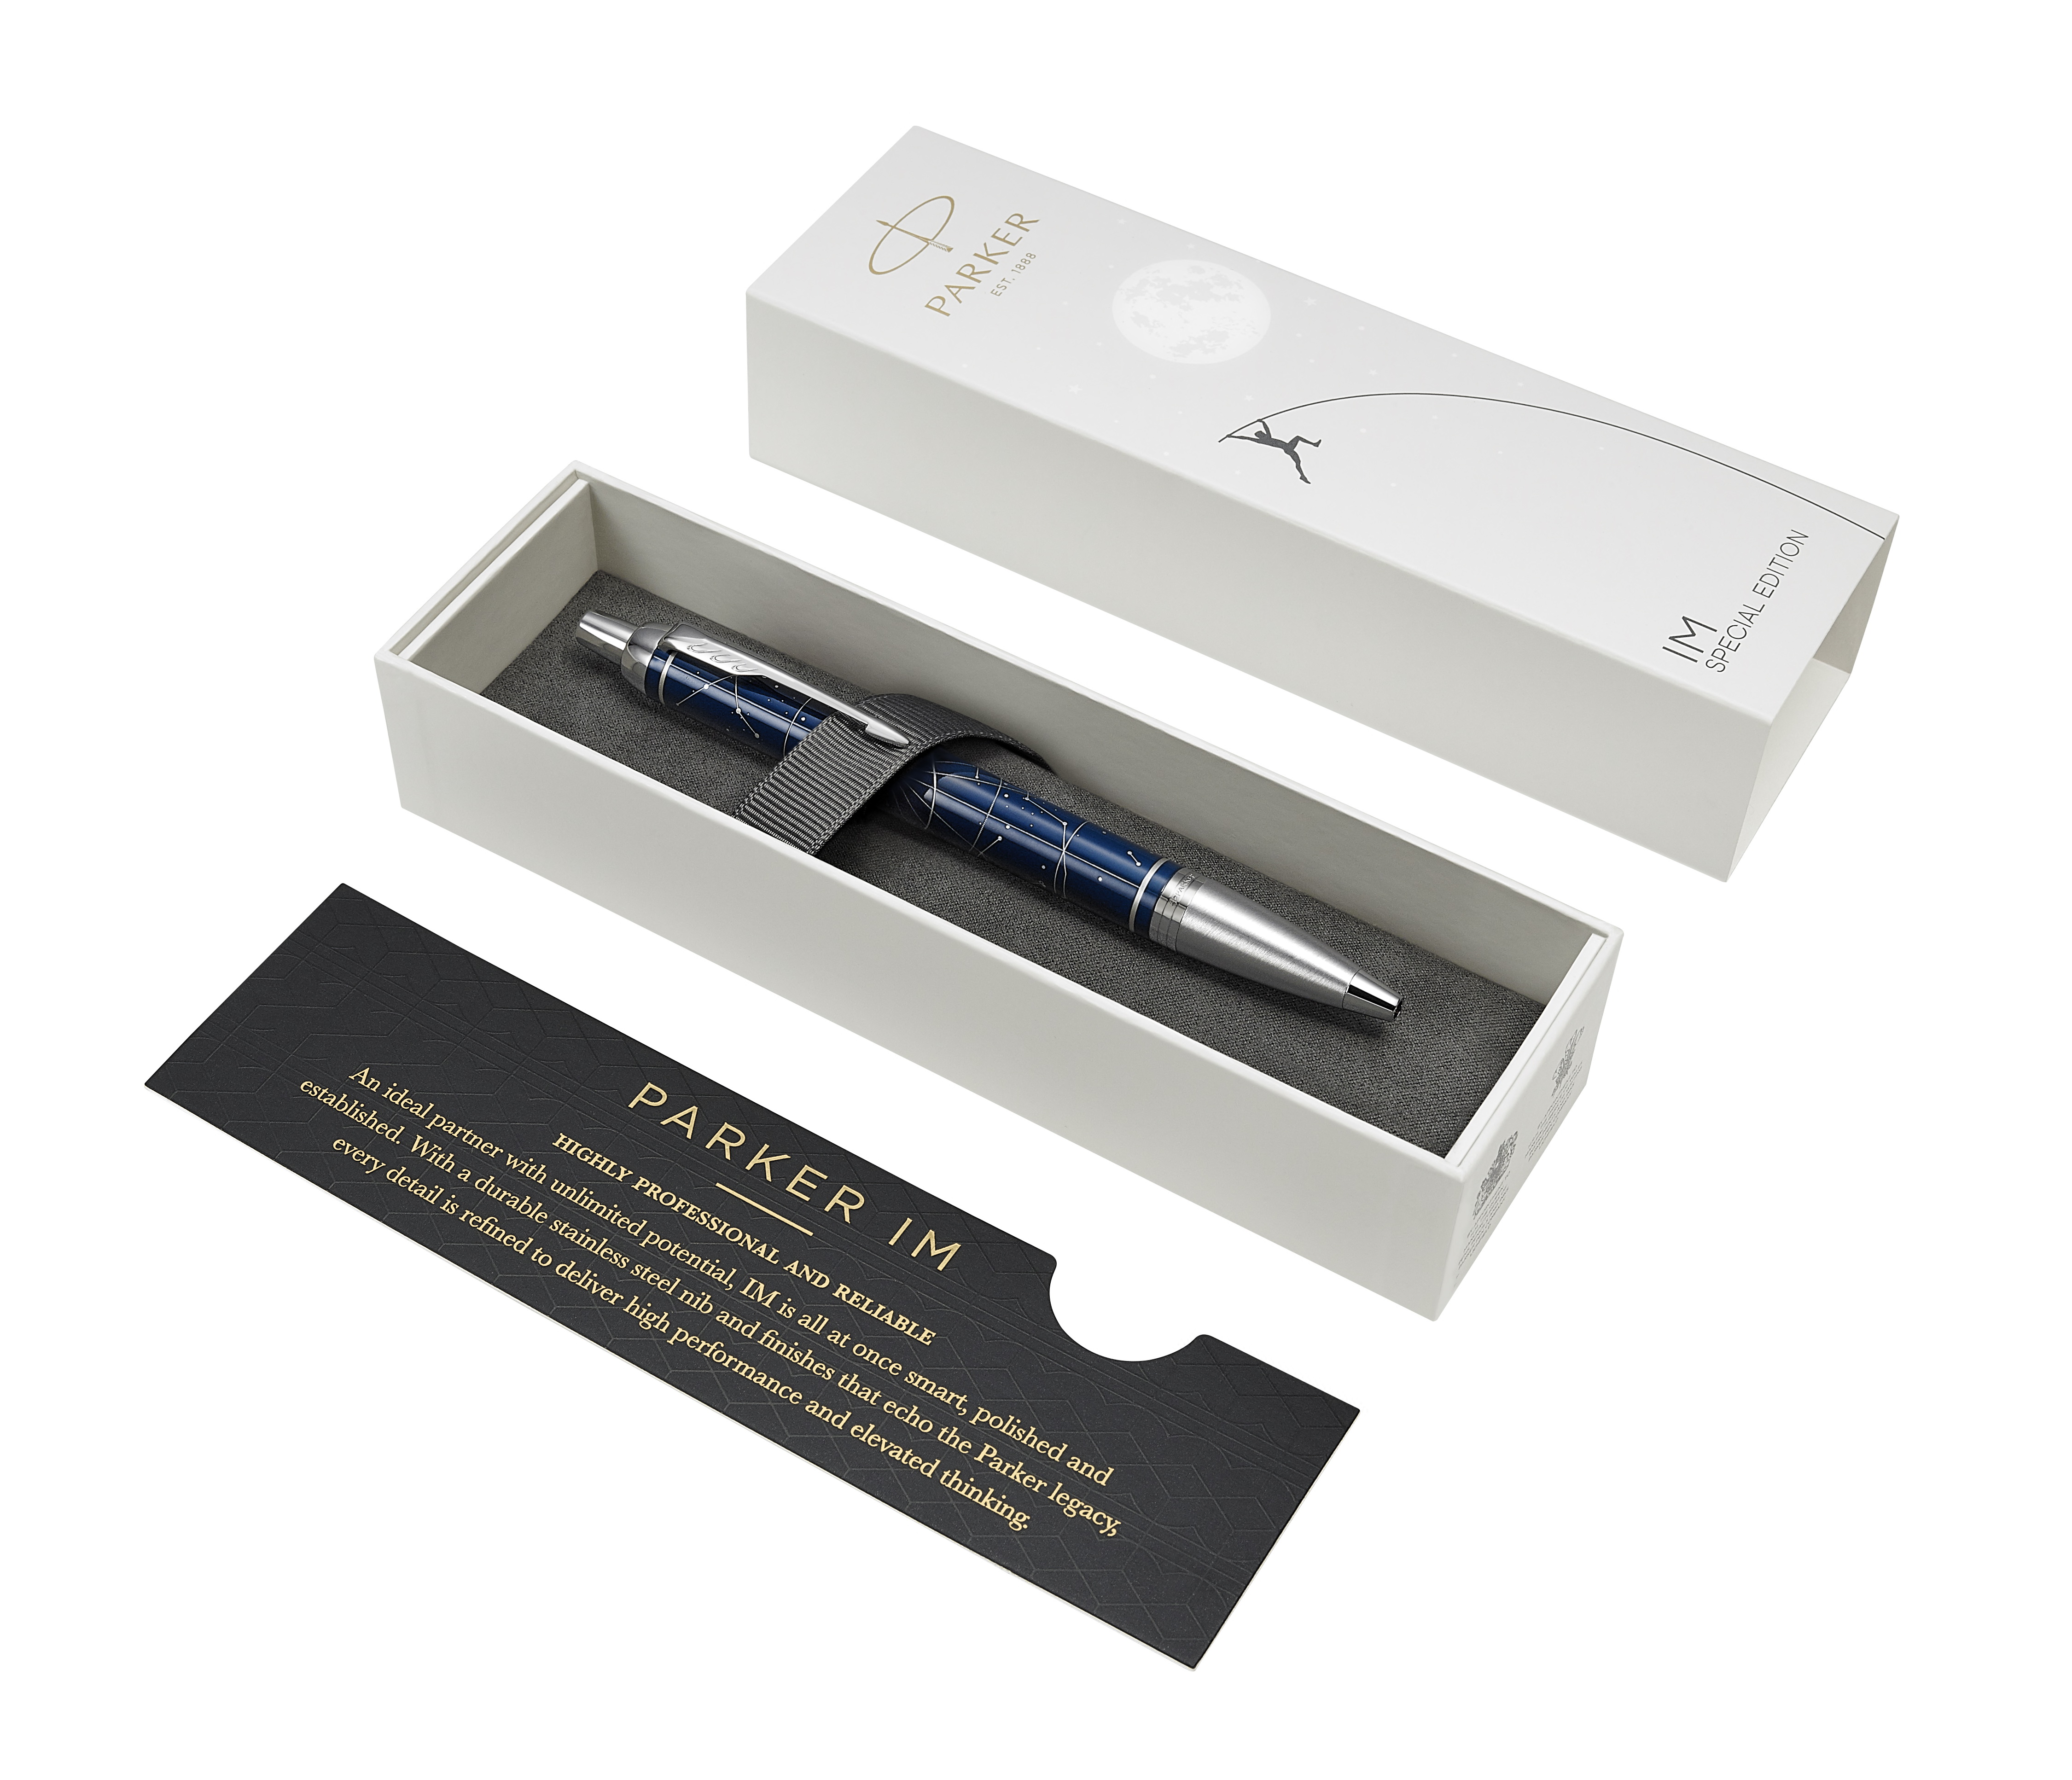 Шариковая ручка «(Паркер) IM Premium SE Midnight astral» | PARKER 